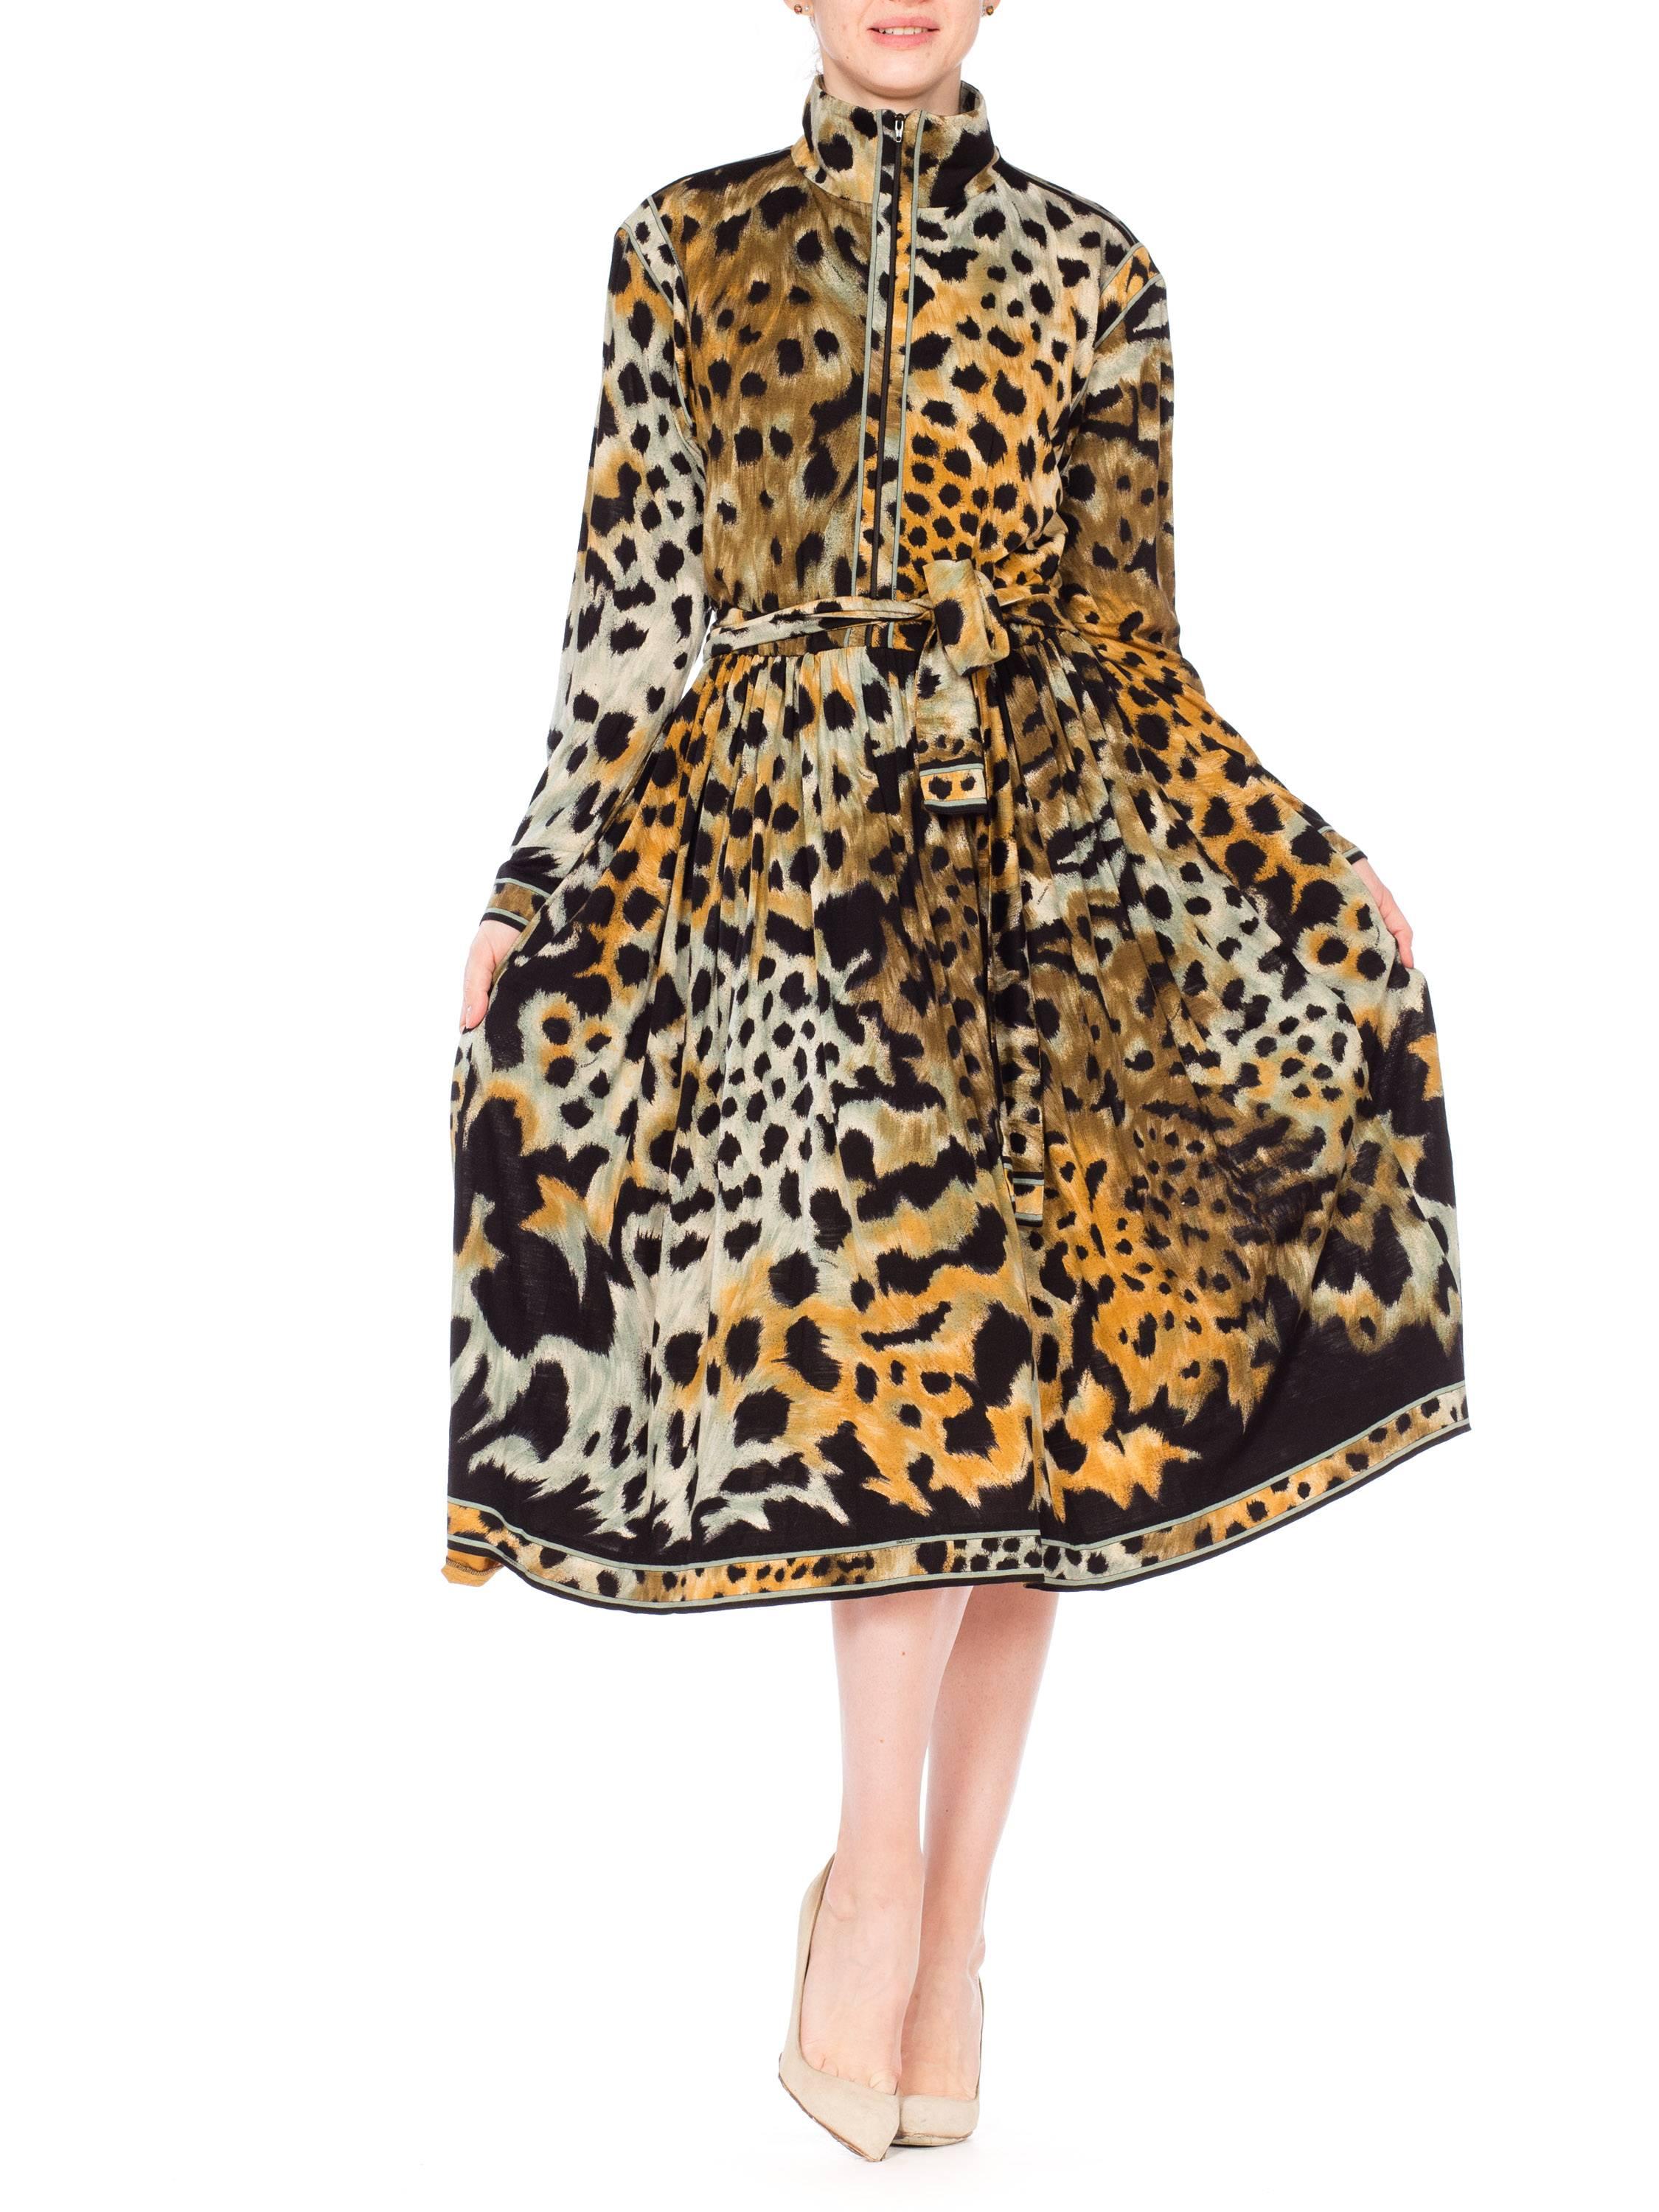 Leopard Print Leonard French Jersey Dress 7